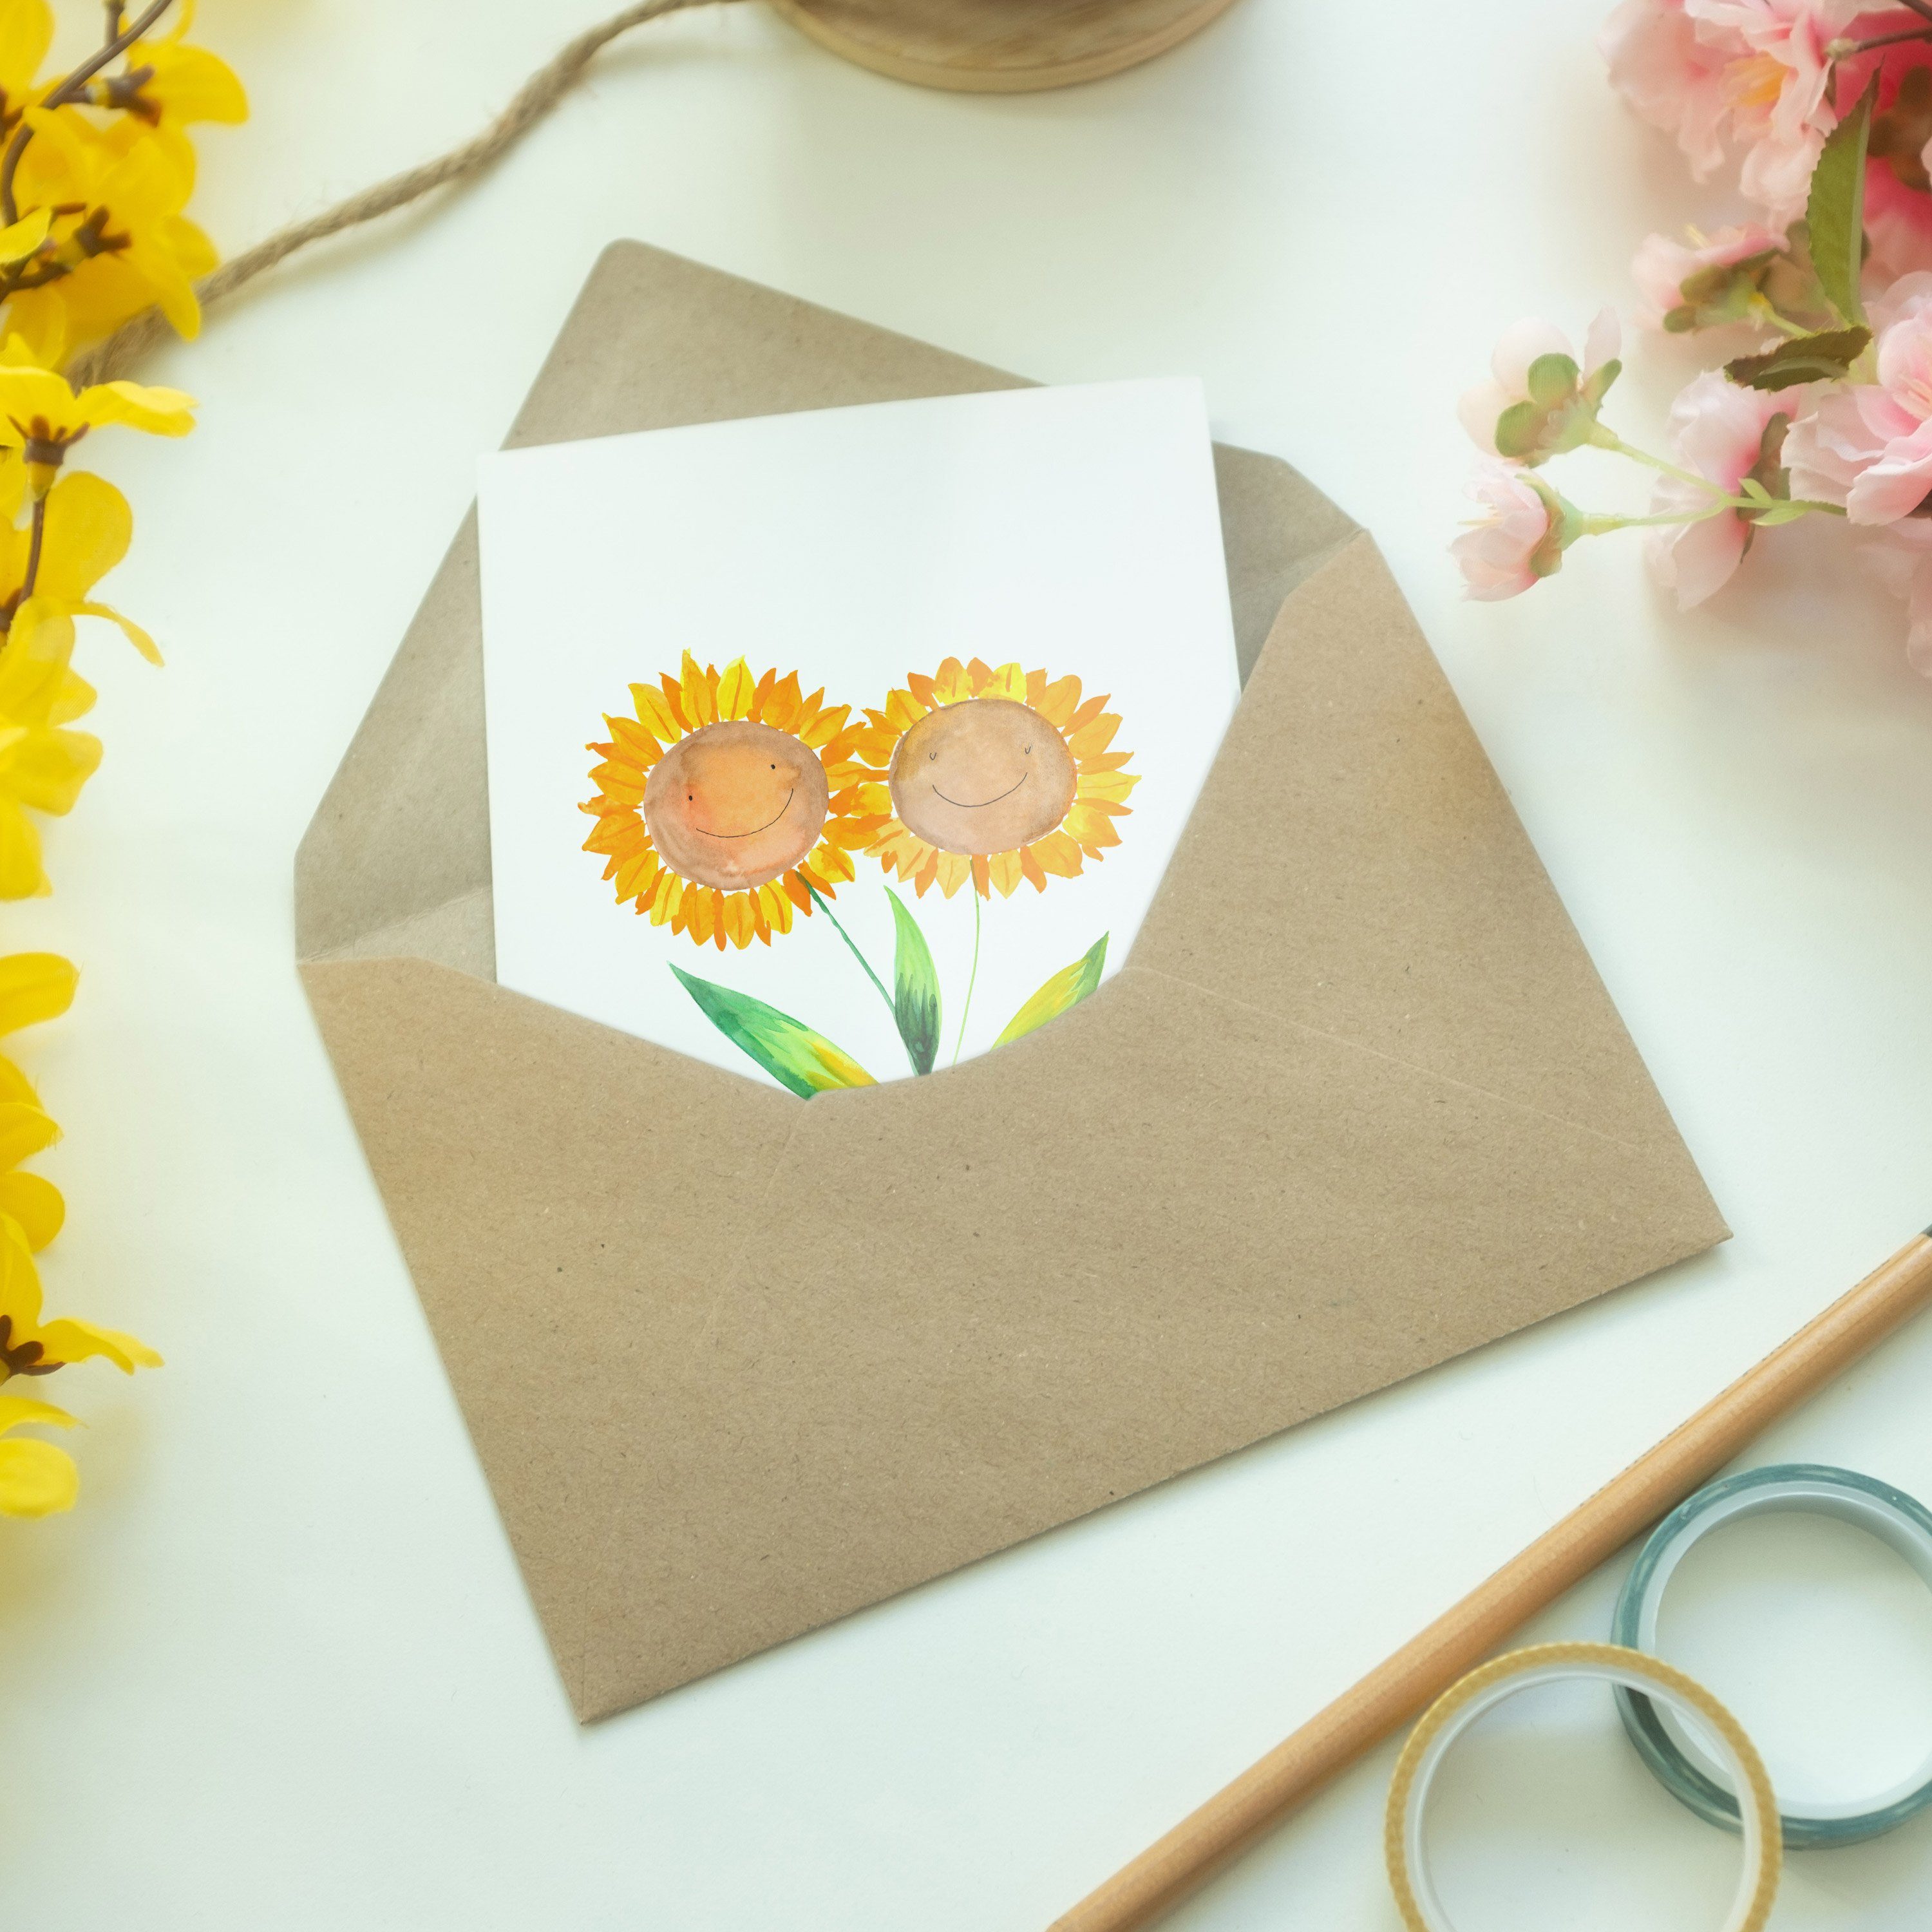 Mr. - Grußkarte Weiß Fre Sonnenblume & Lieblingsmensch, Mrs. - Geschenk, Geburtstagskarte, Panda